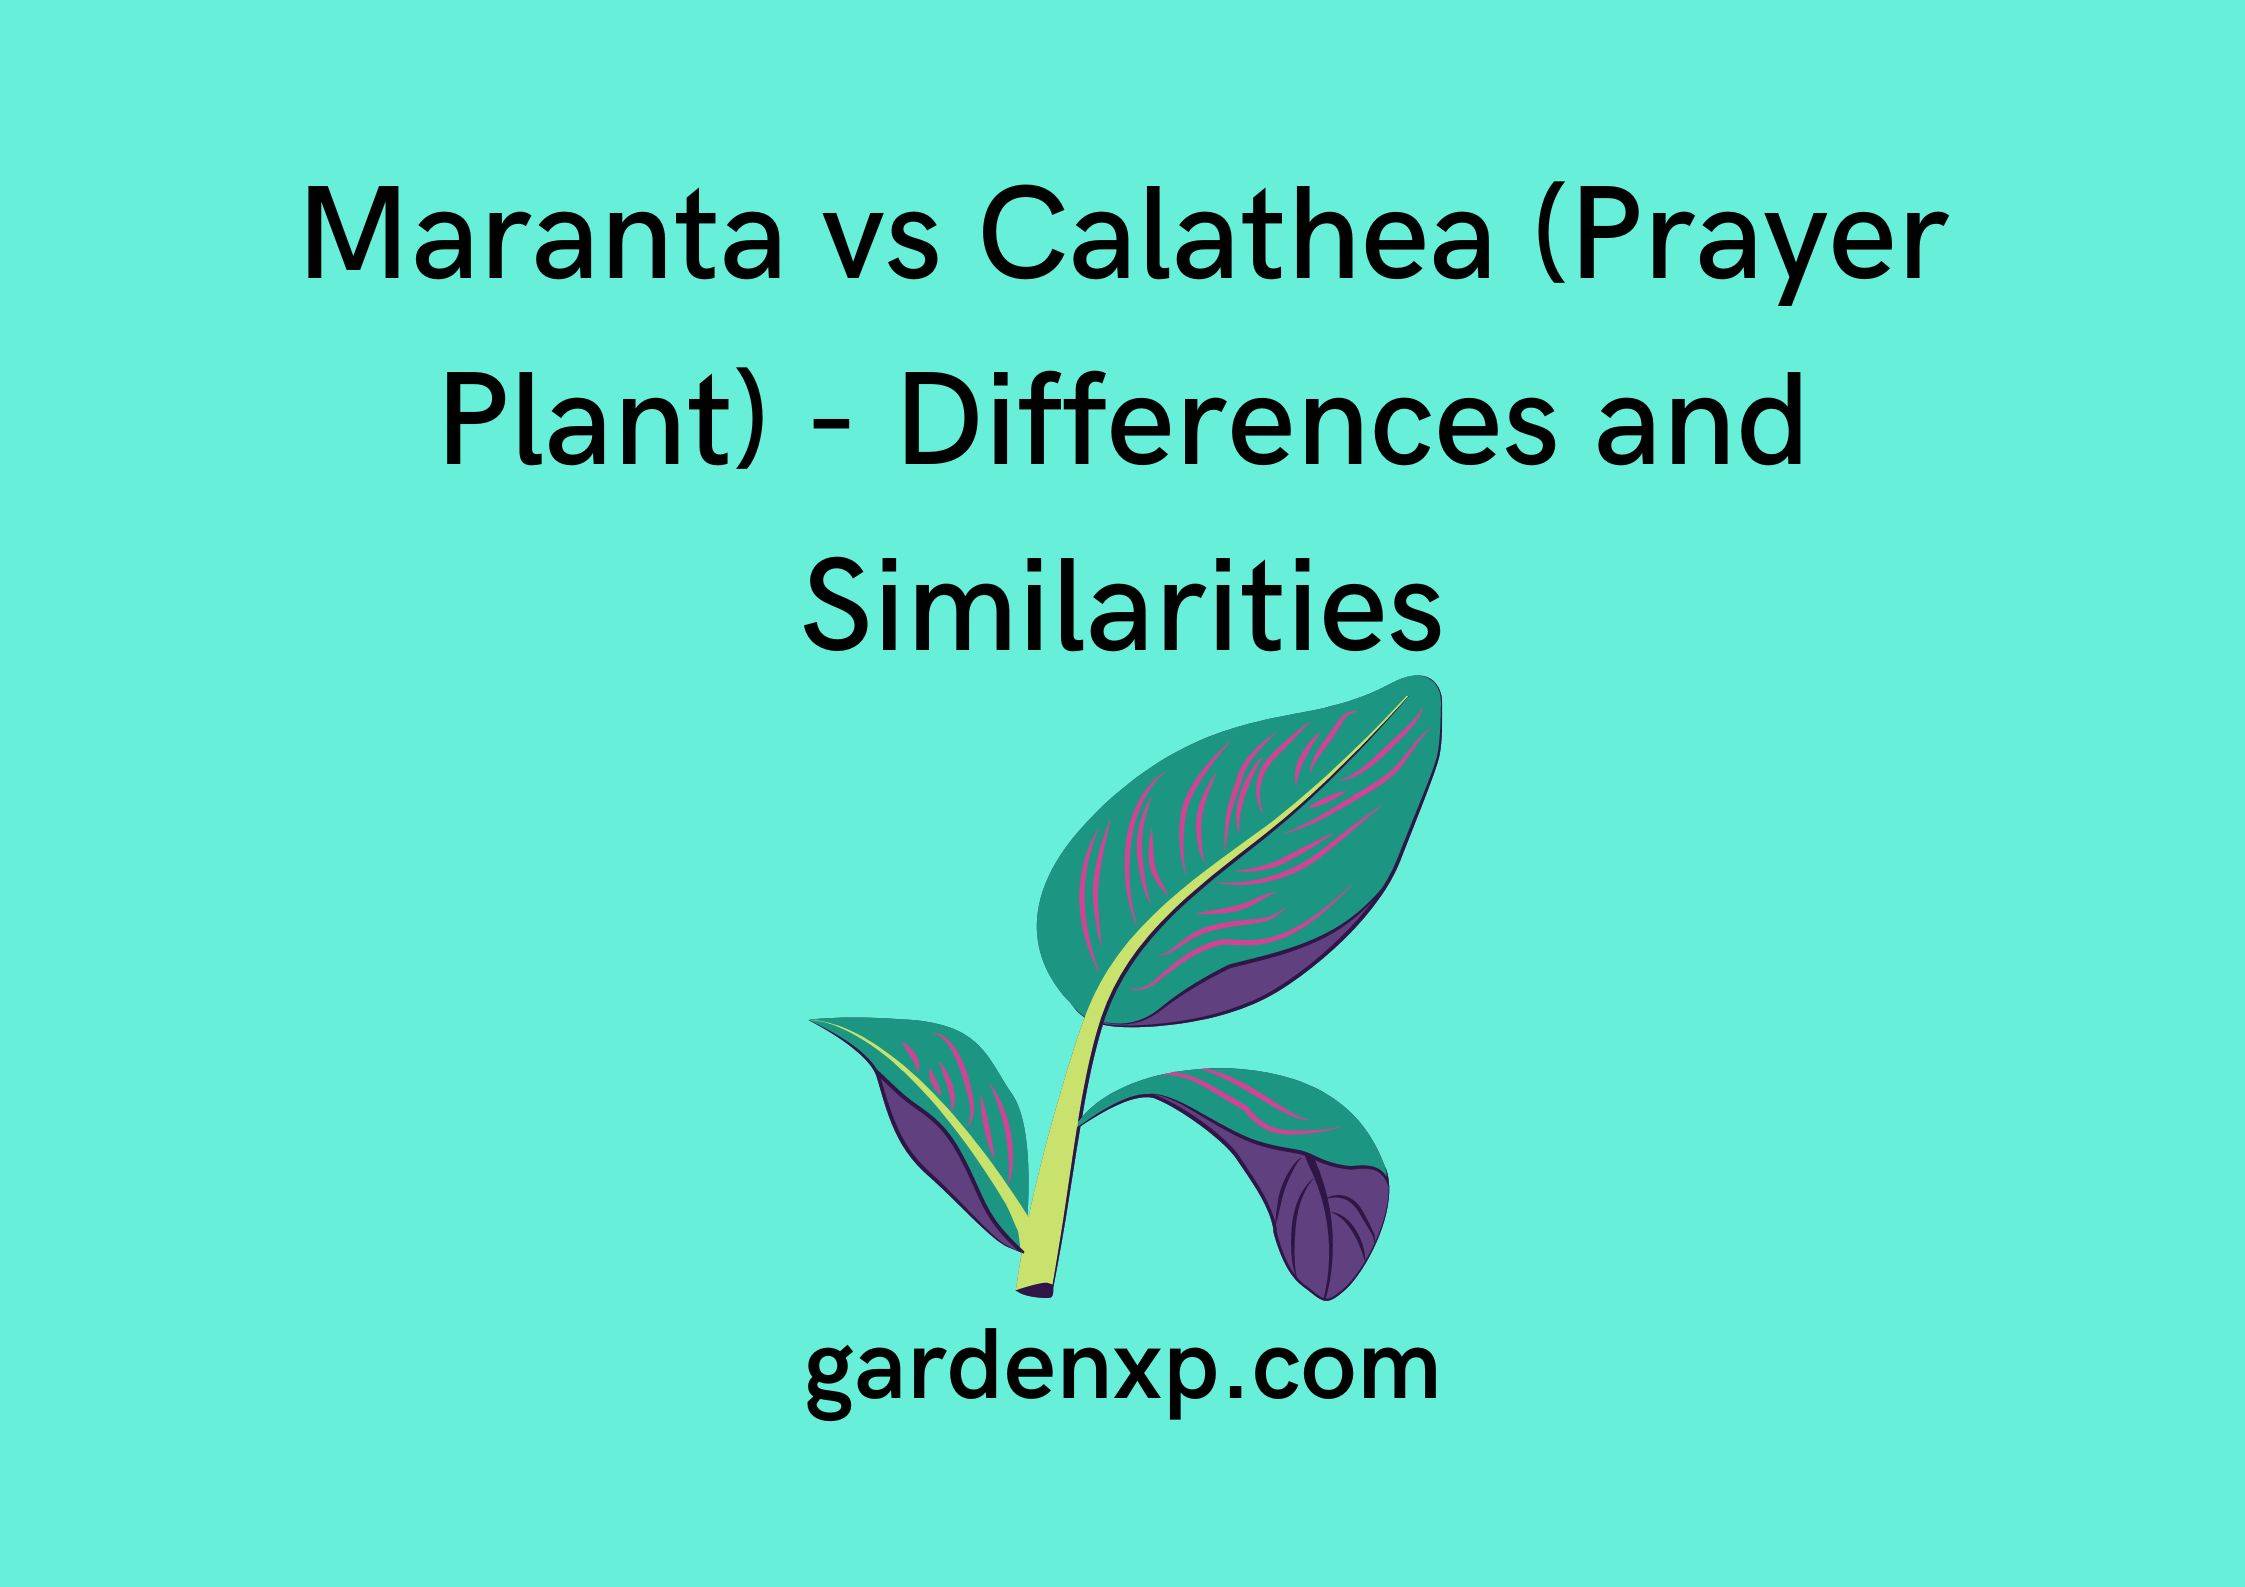 Maranta vs Calathea (Prayer Plant) - Differences and Similarities